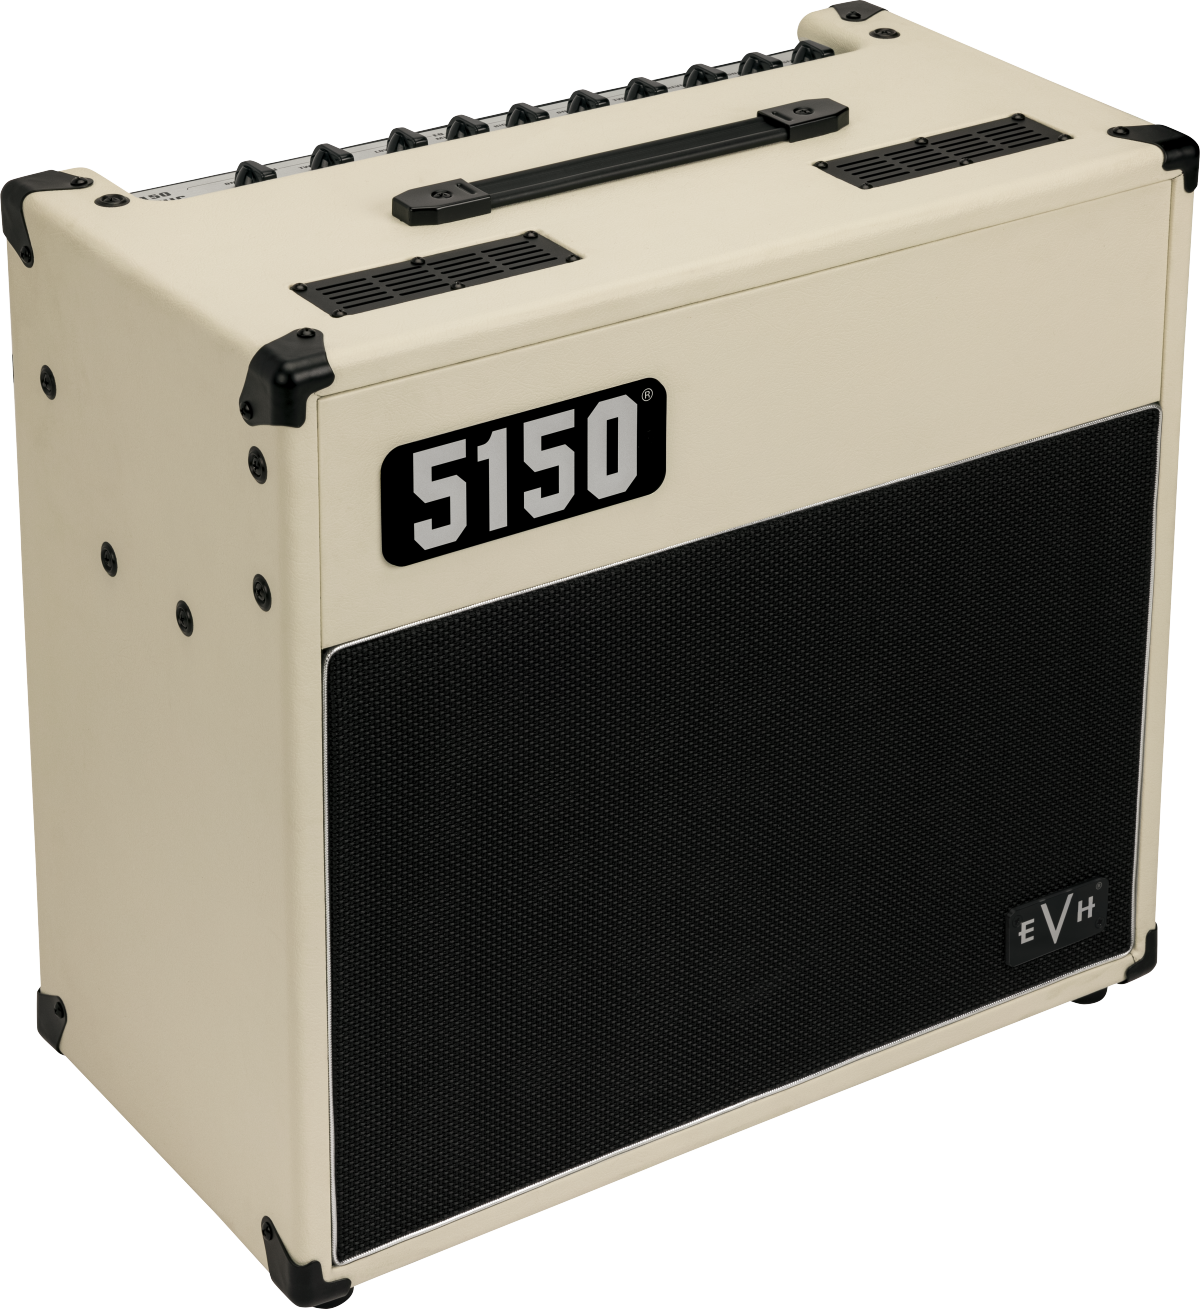 Evh 5150 Iconic Series Combo Ivory 15w 1x10 - Combo amplificador para guitarra eléctrica - Variation 2